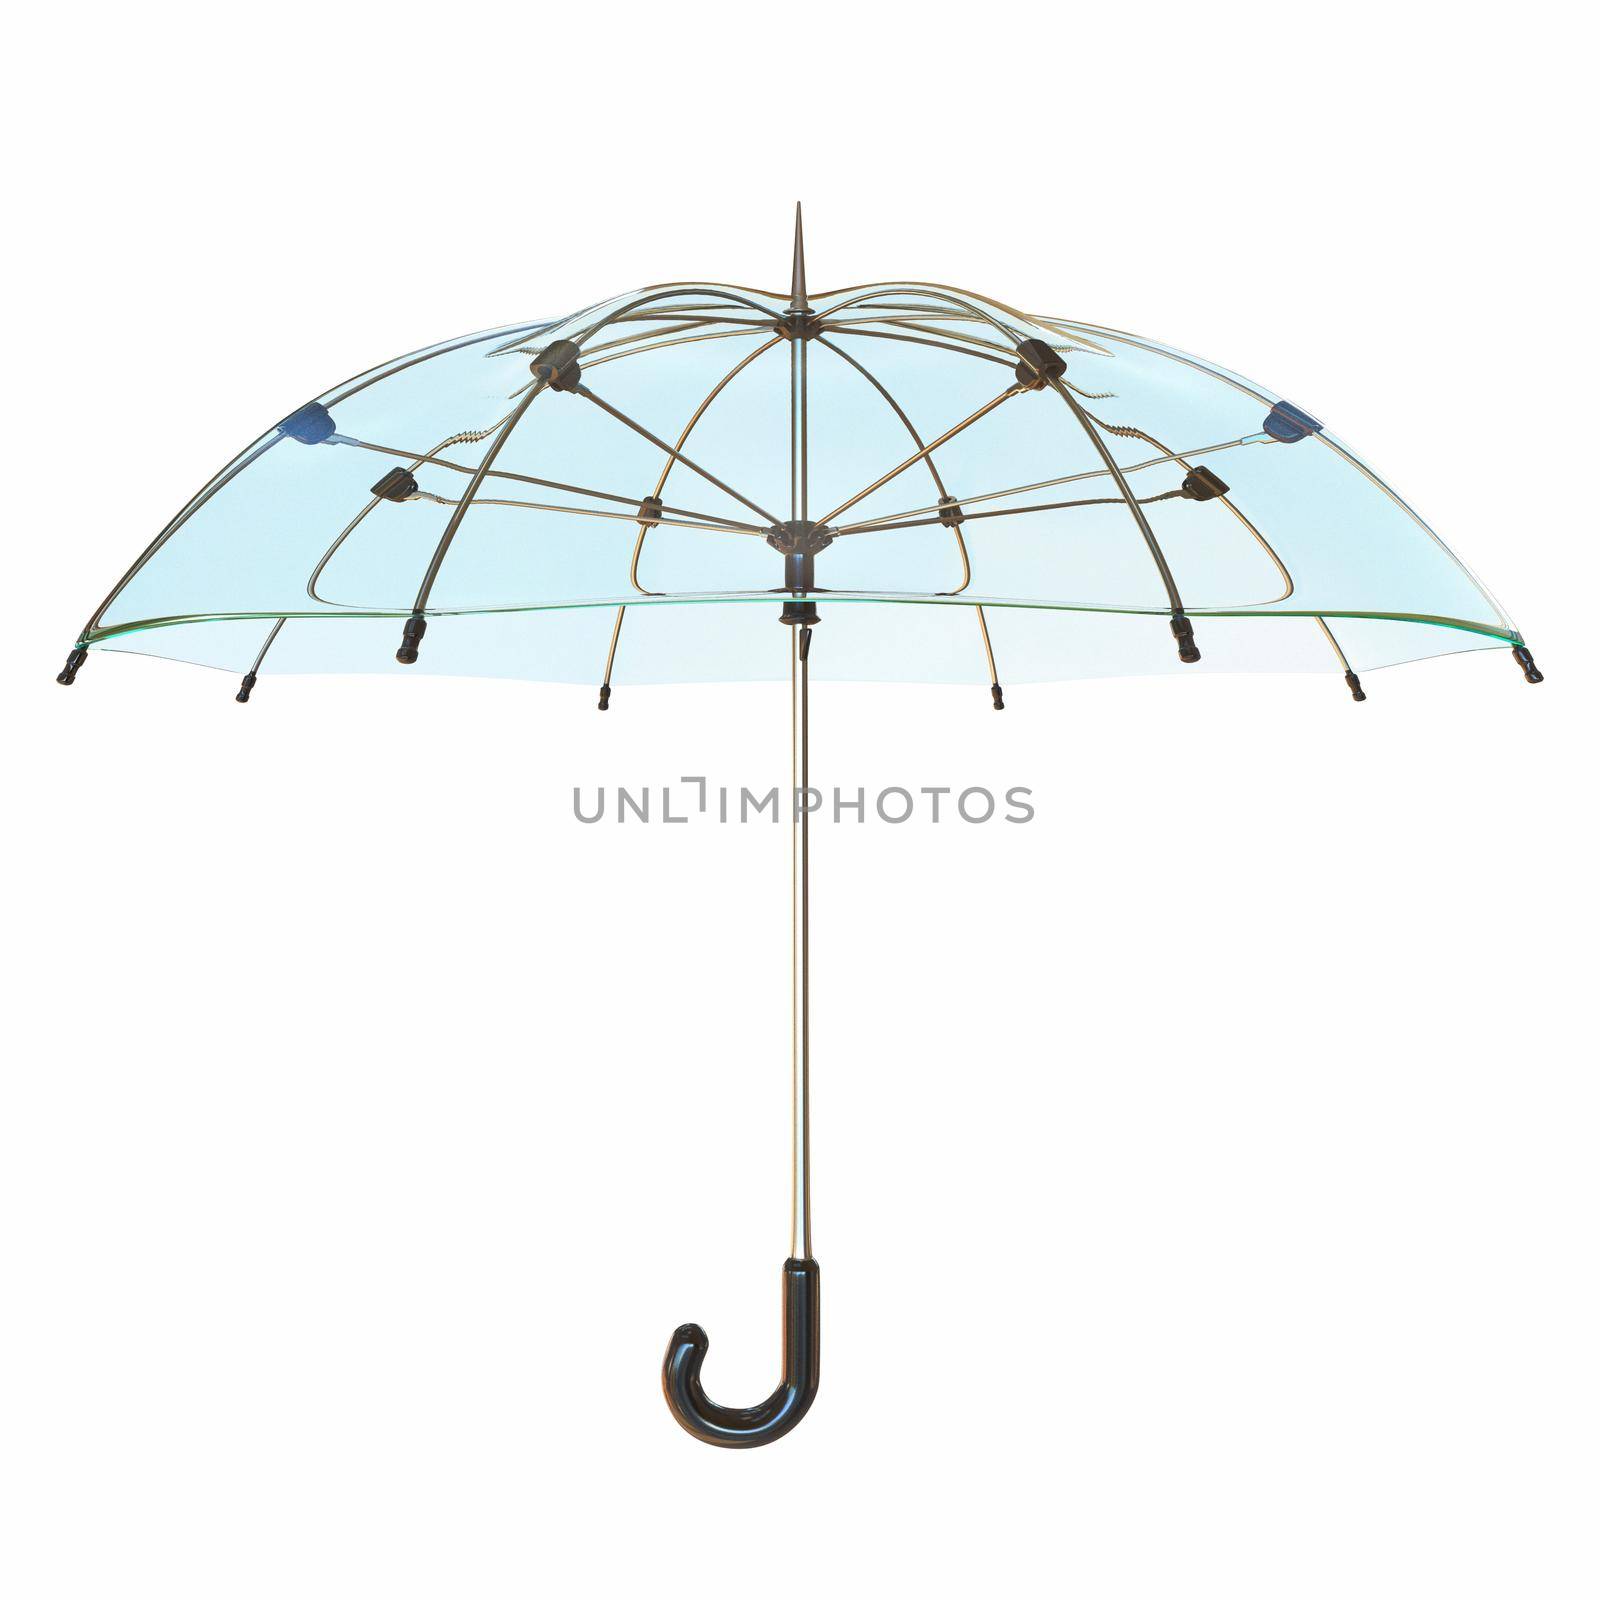 Opened transparent umbrella 3D render illustration isolated on white background